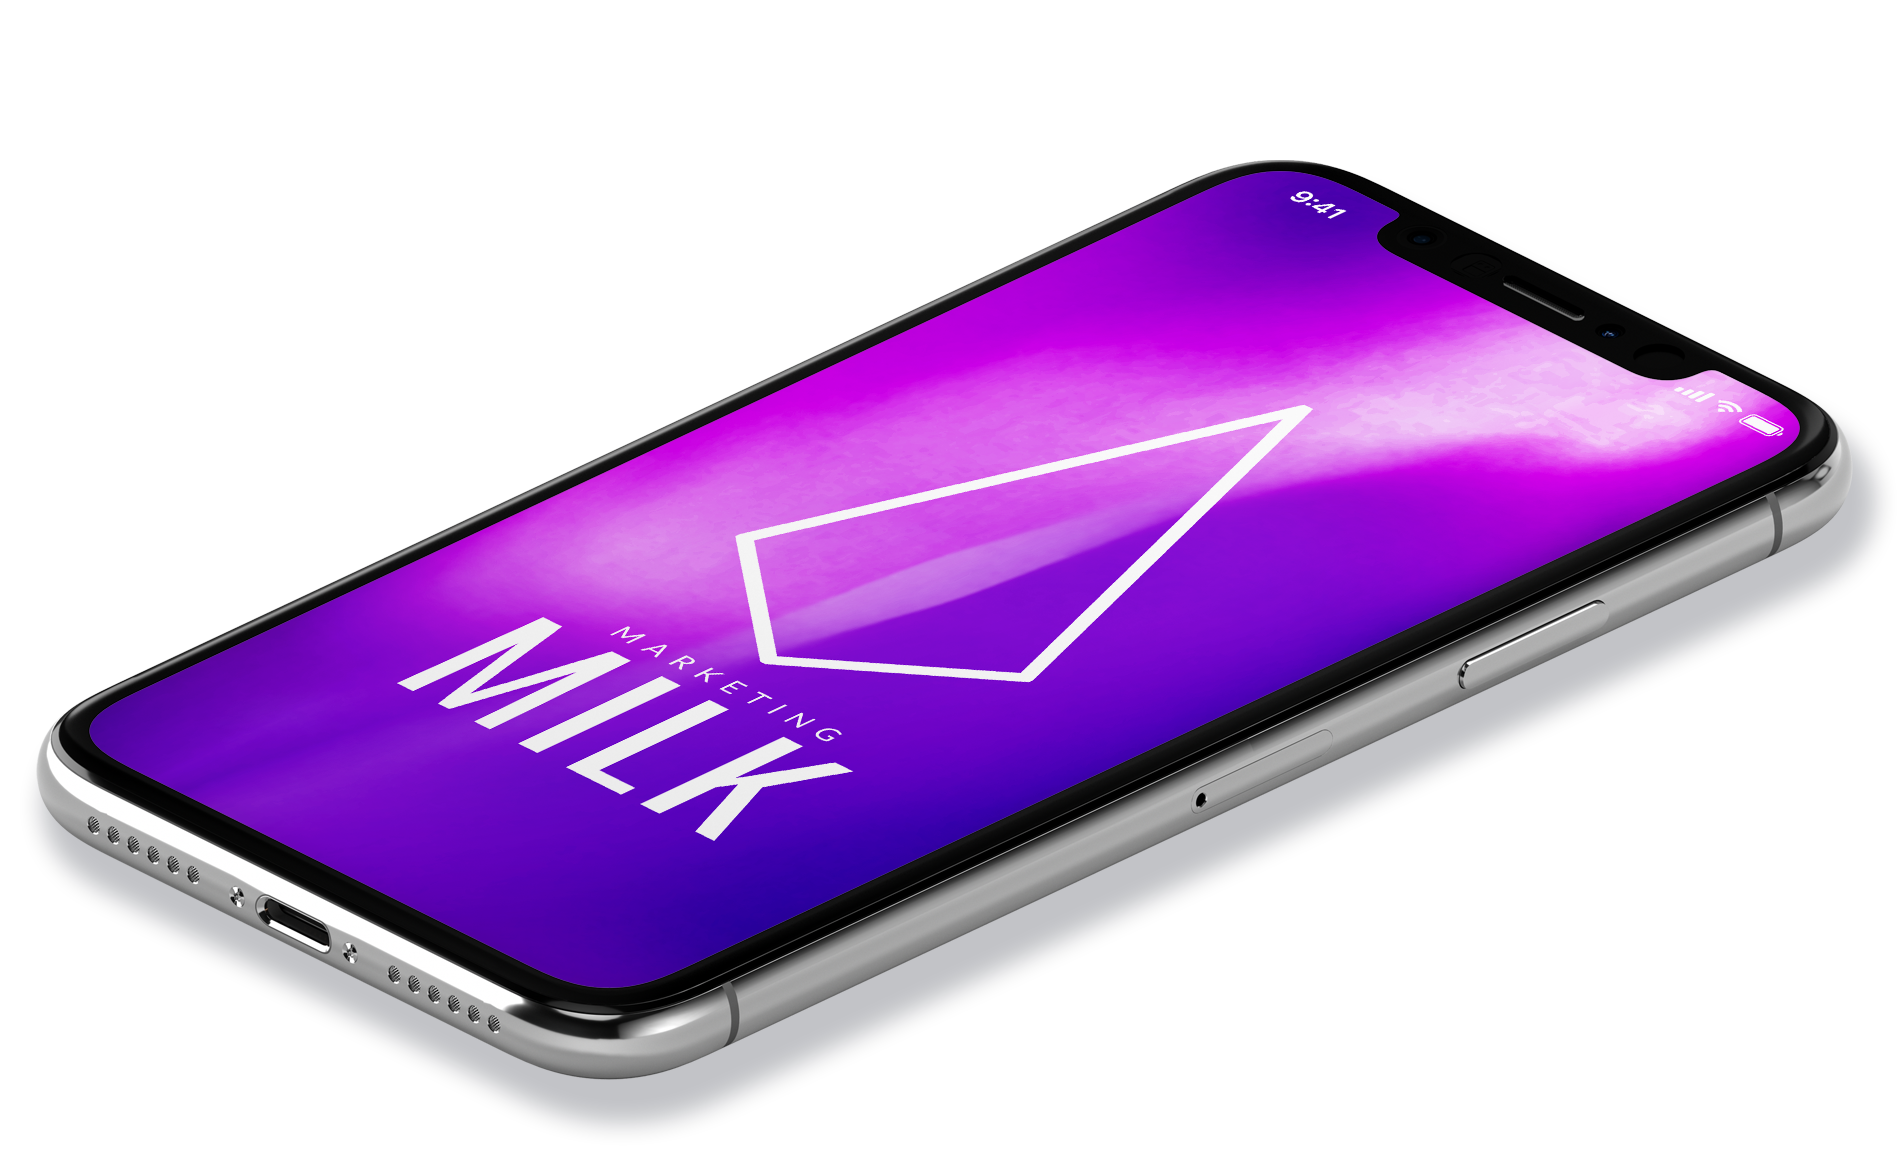 iphone with marketing milk logo on screen